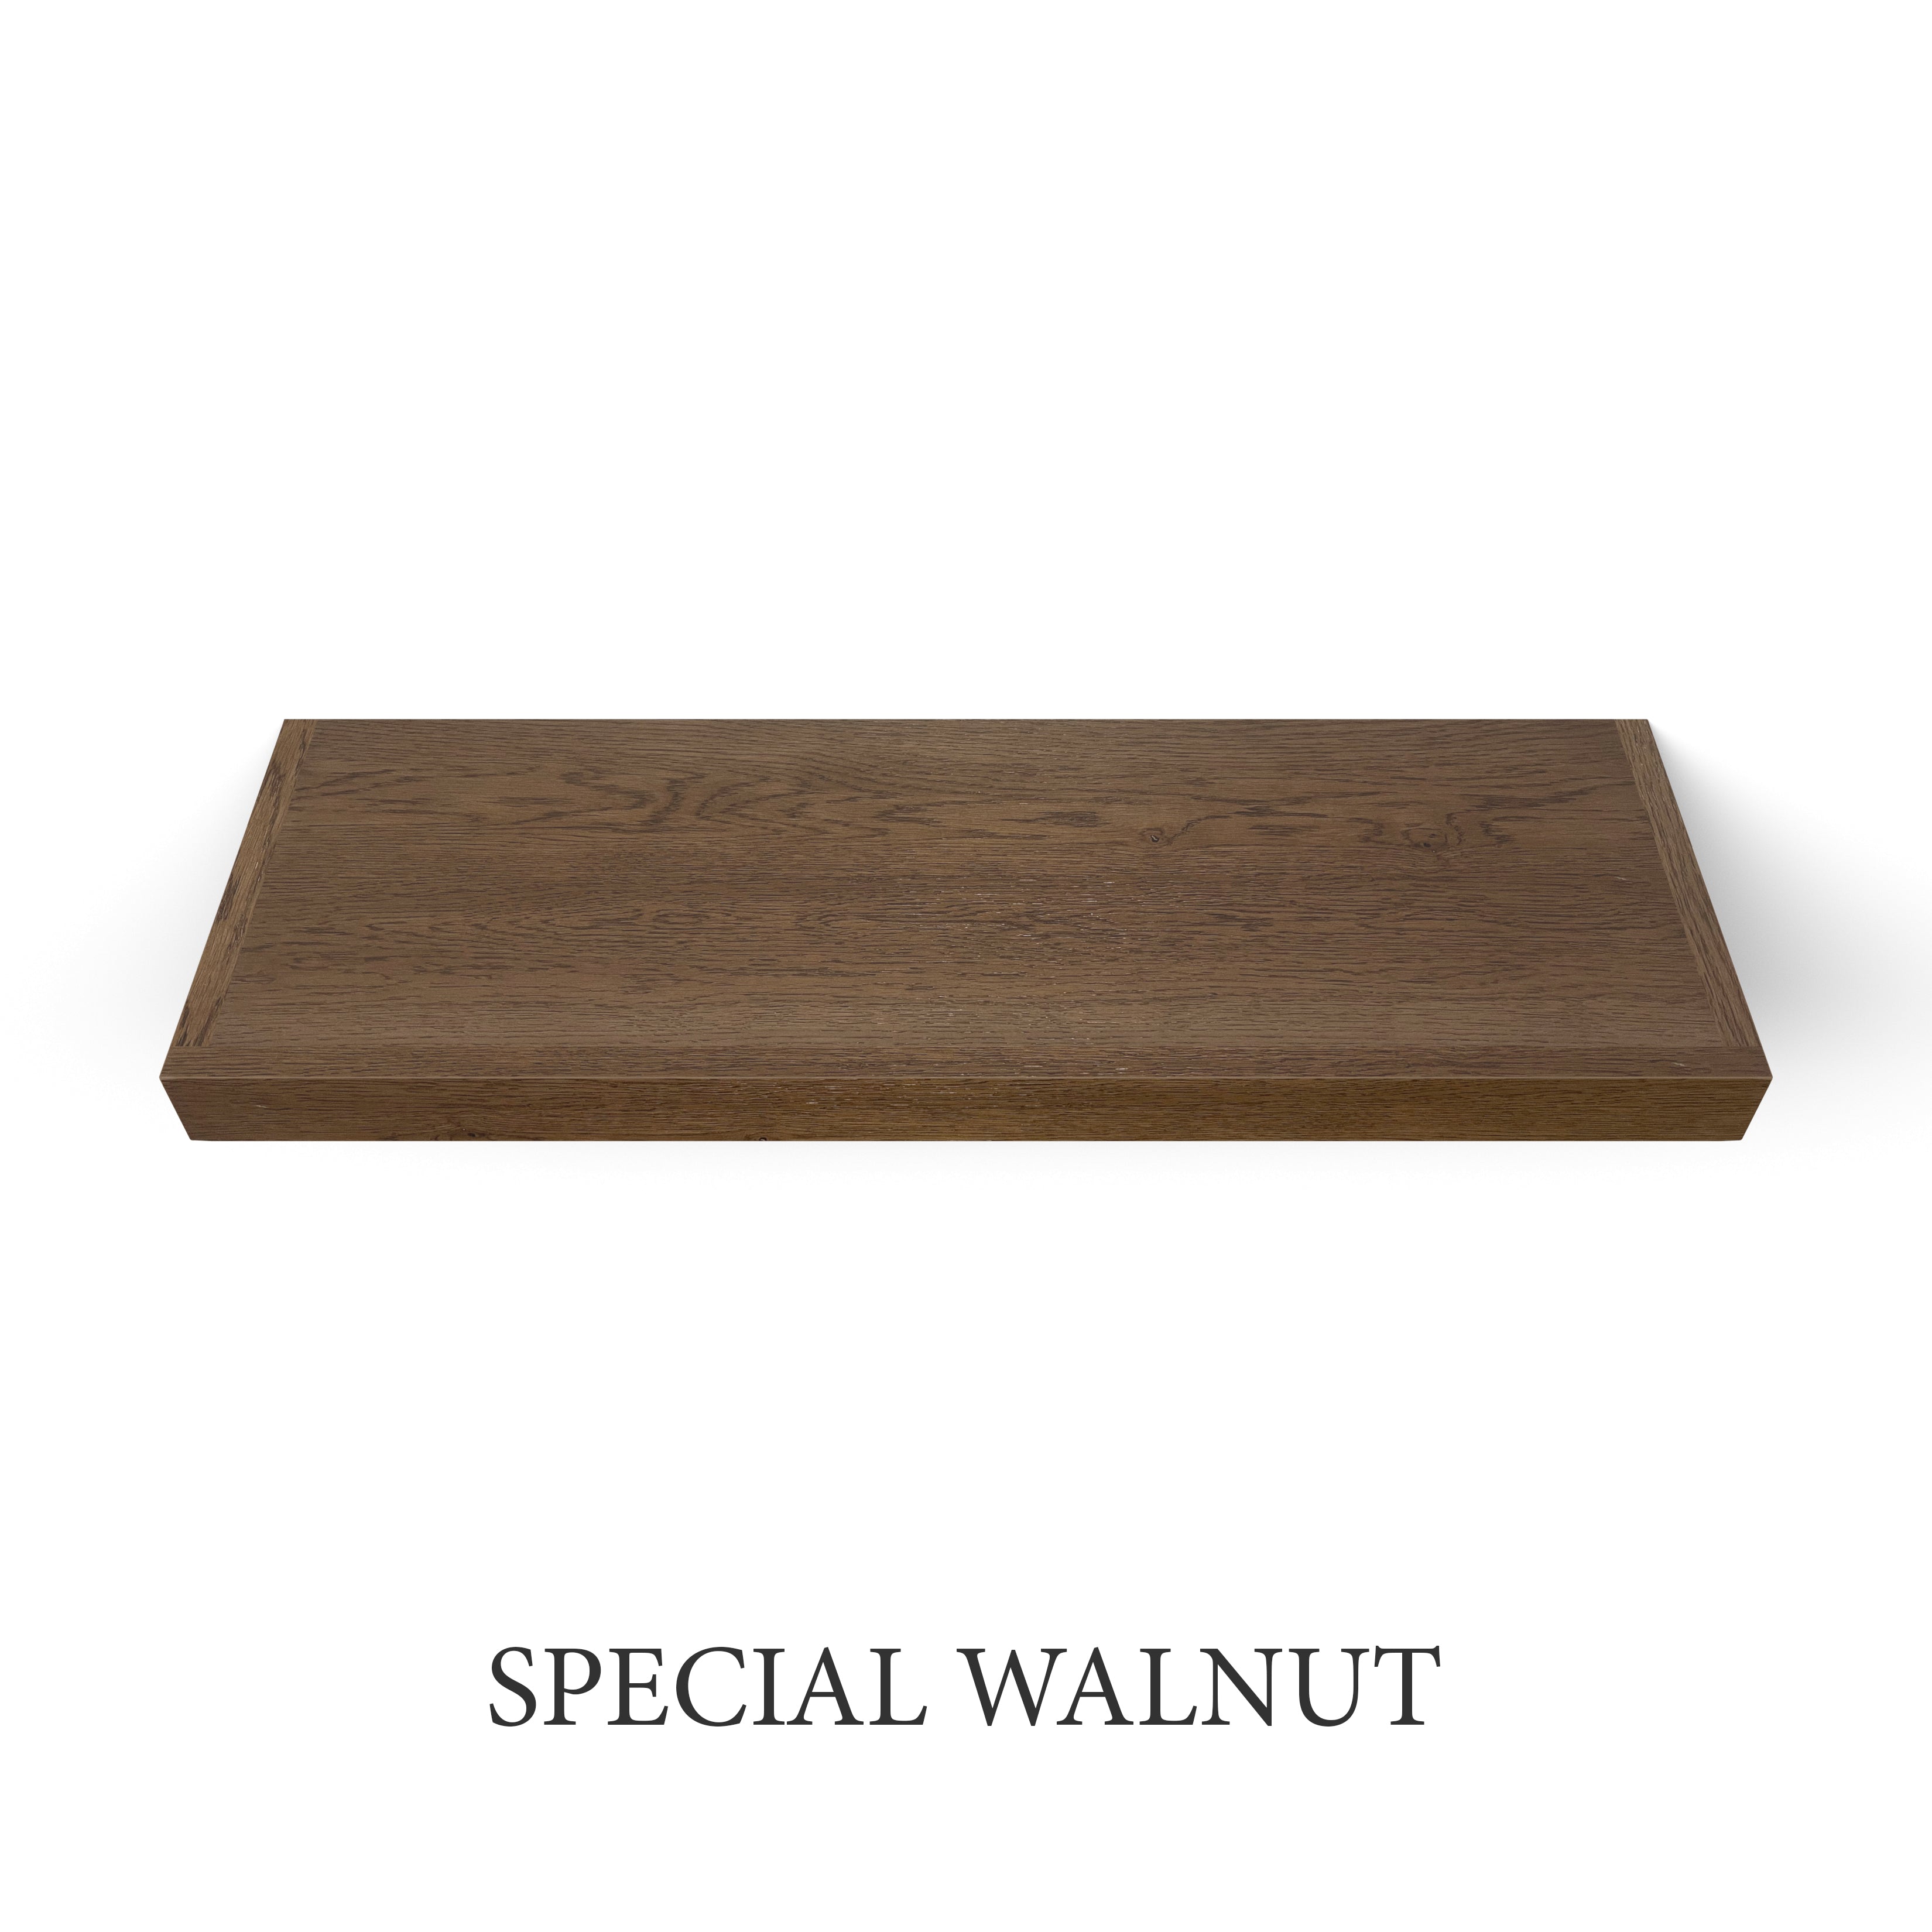 special walnut White Oak 2 Inch Thick Floating Shelf